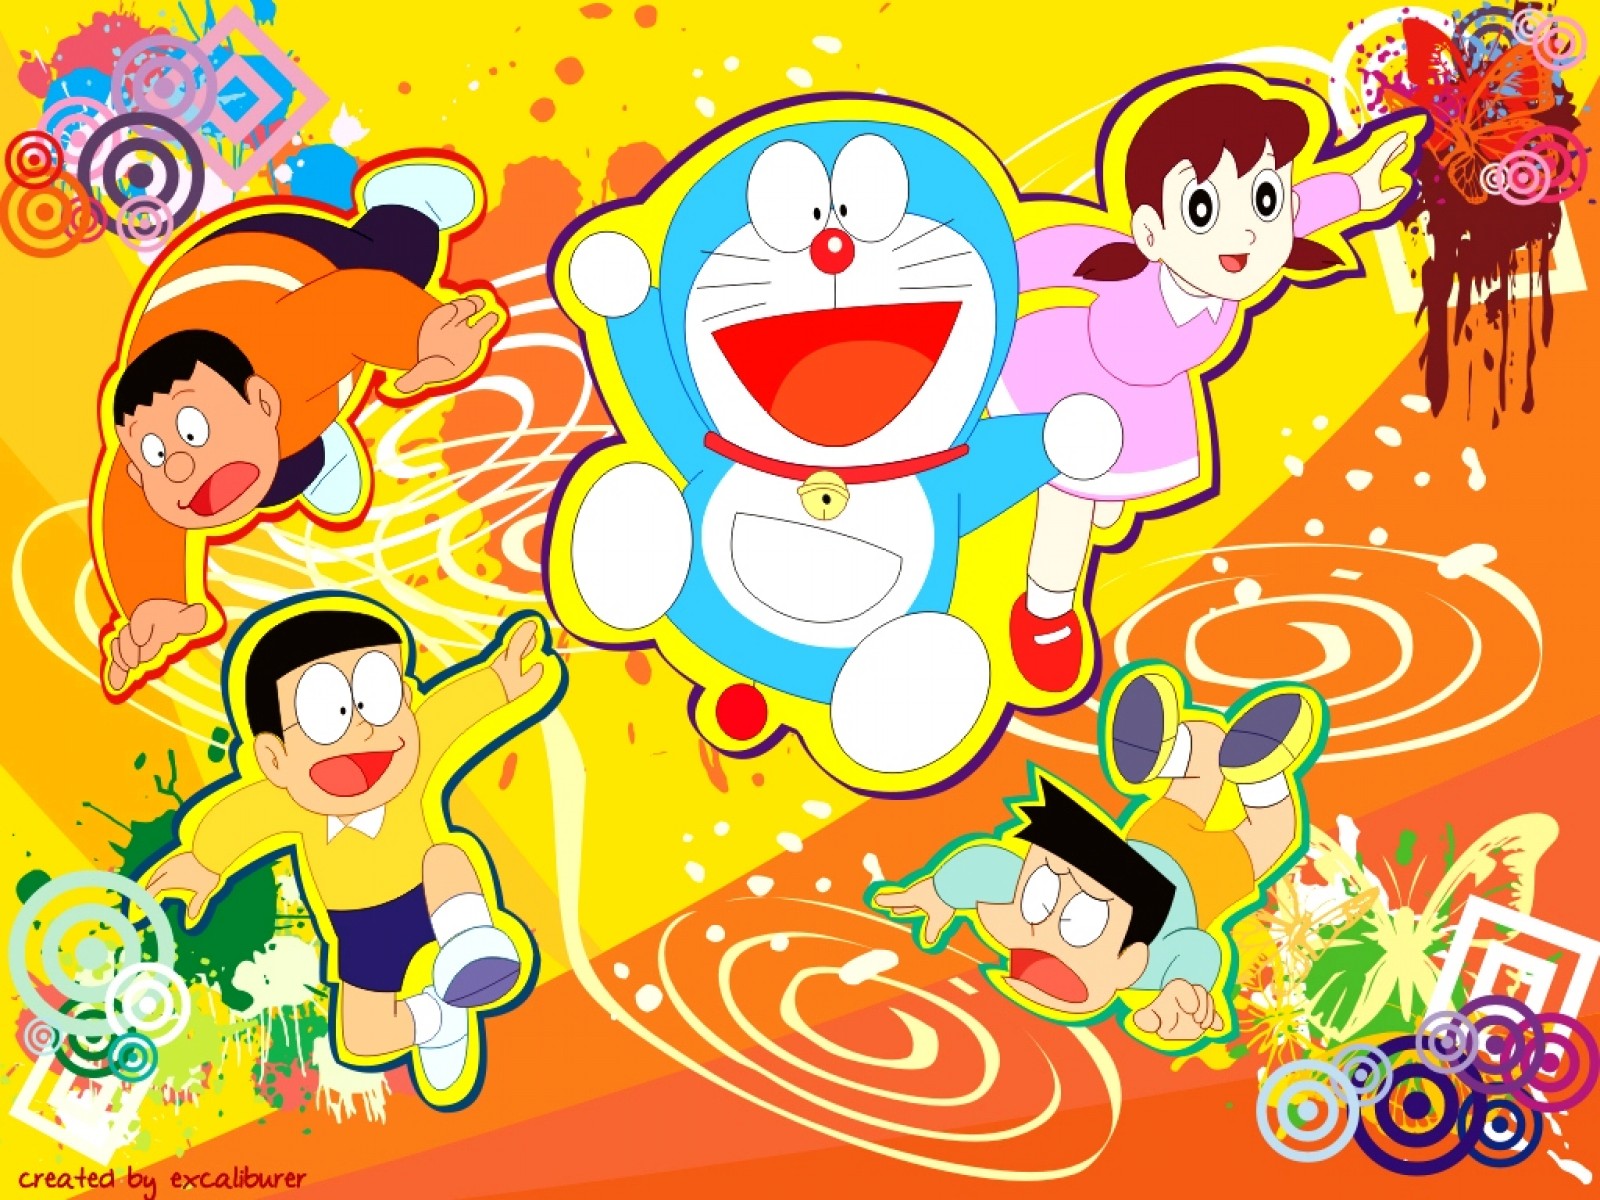 Doraemon Cartoon - Wallpaper, High Definition, High Quality, Widescreen